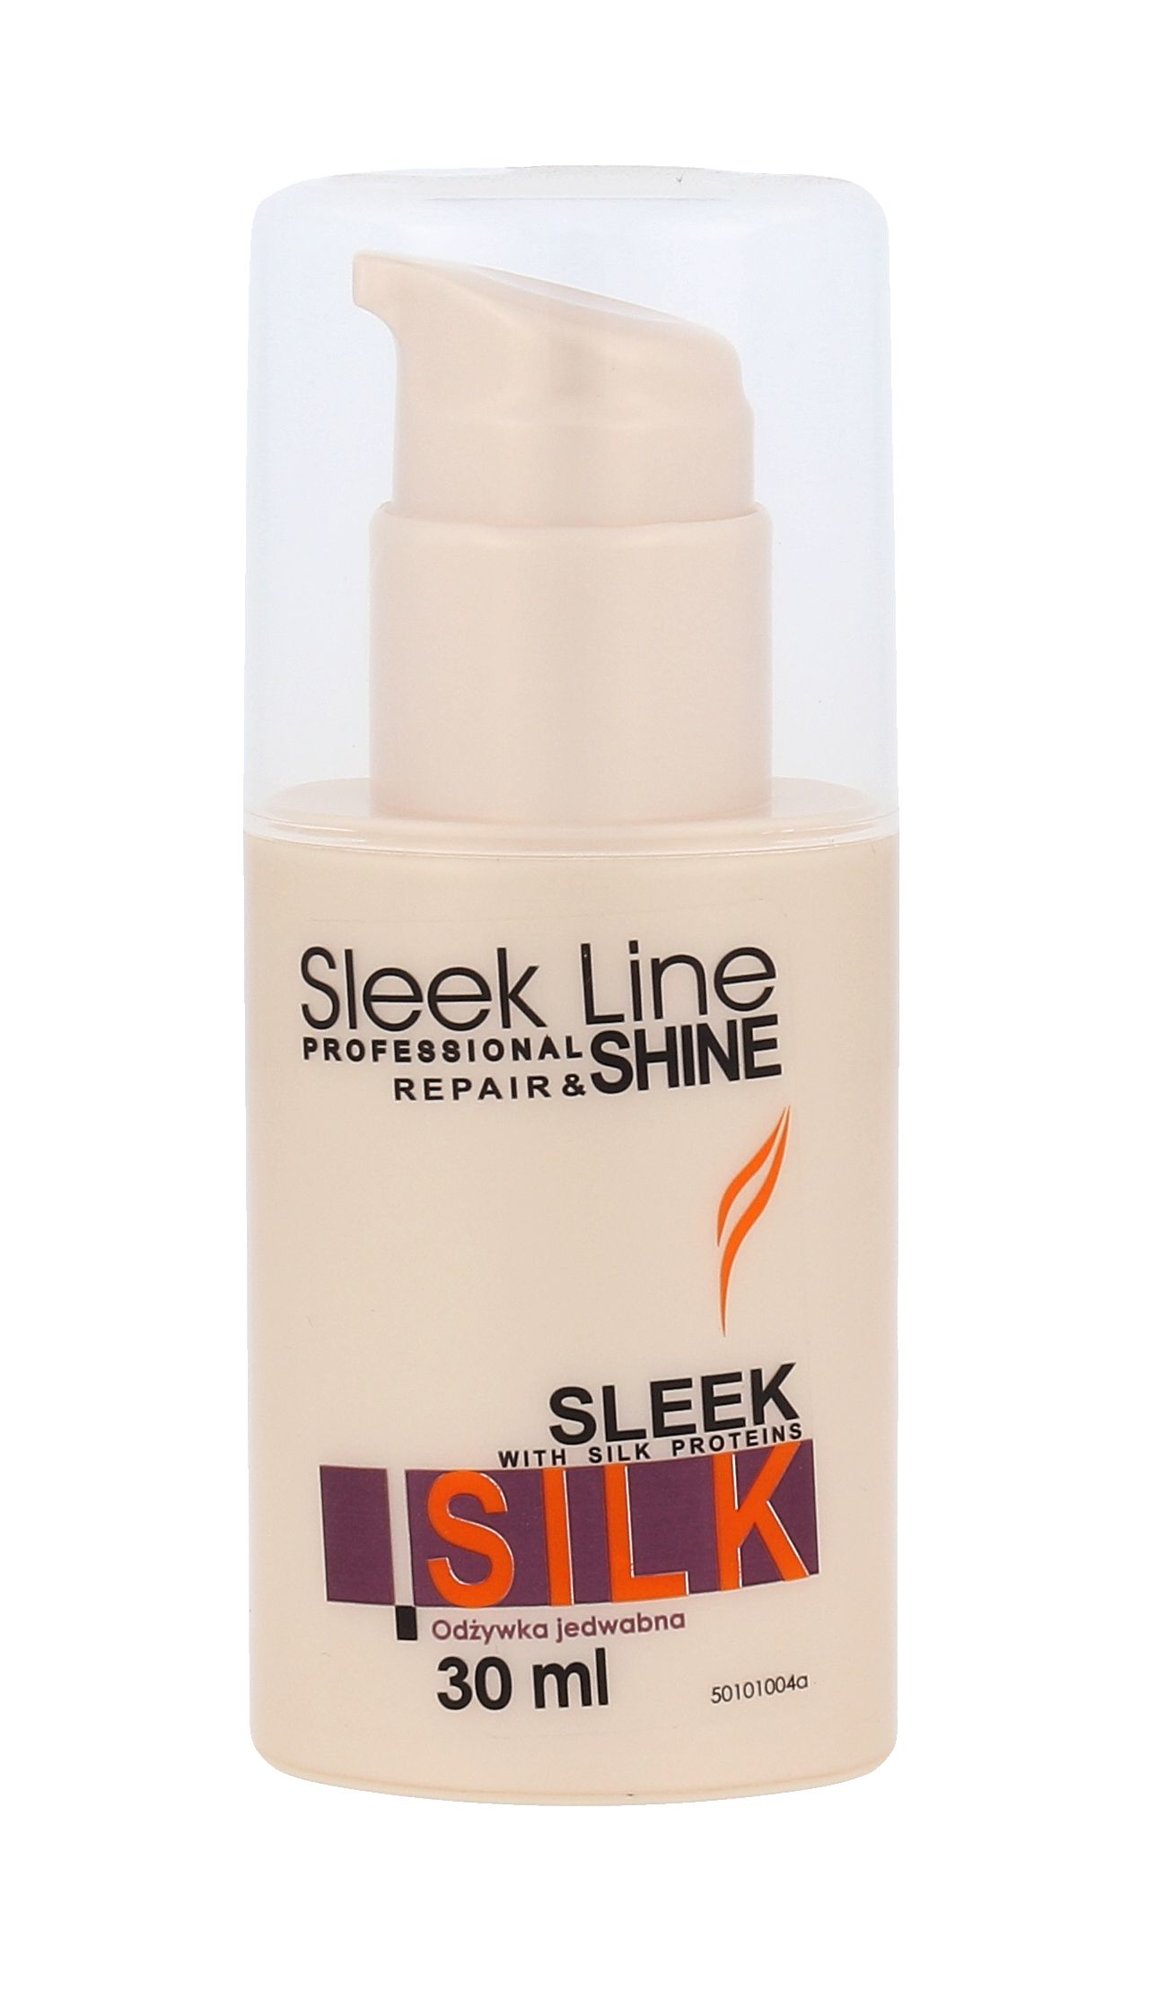 Stapiz Sleek Line Silk 30ml kondicionierius